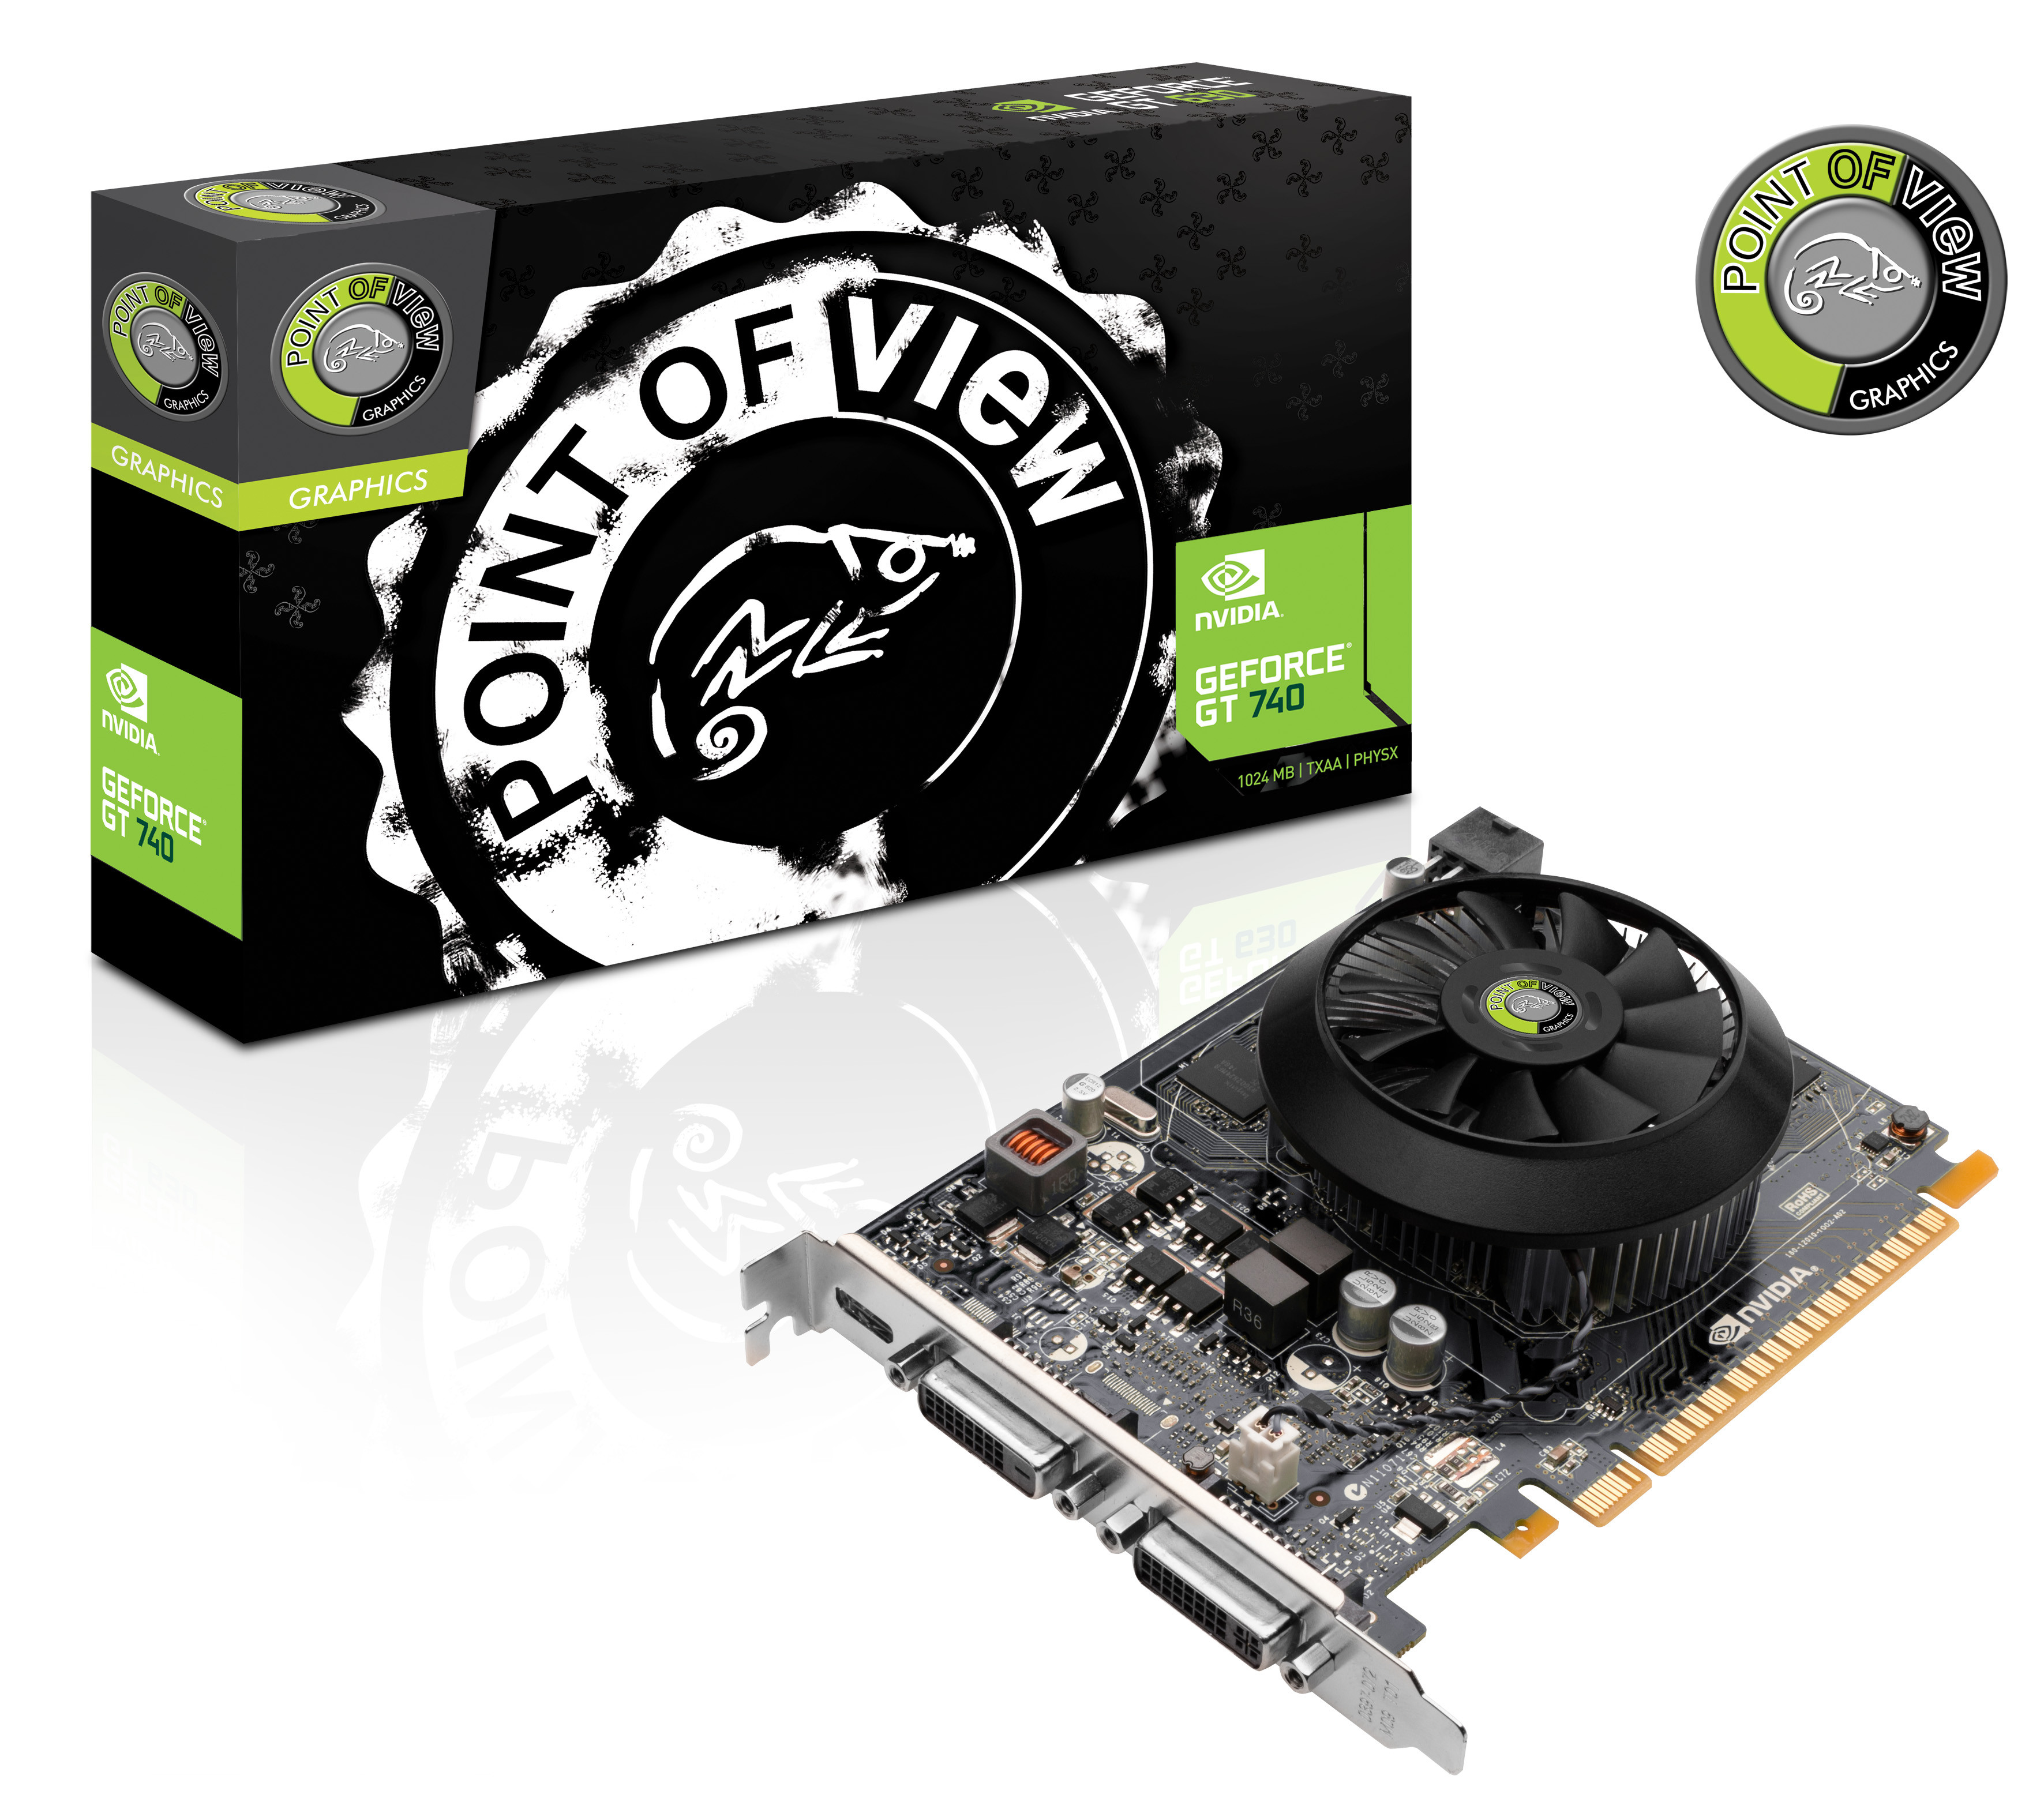 NVIDIA GeForce GT 740 Specs